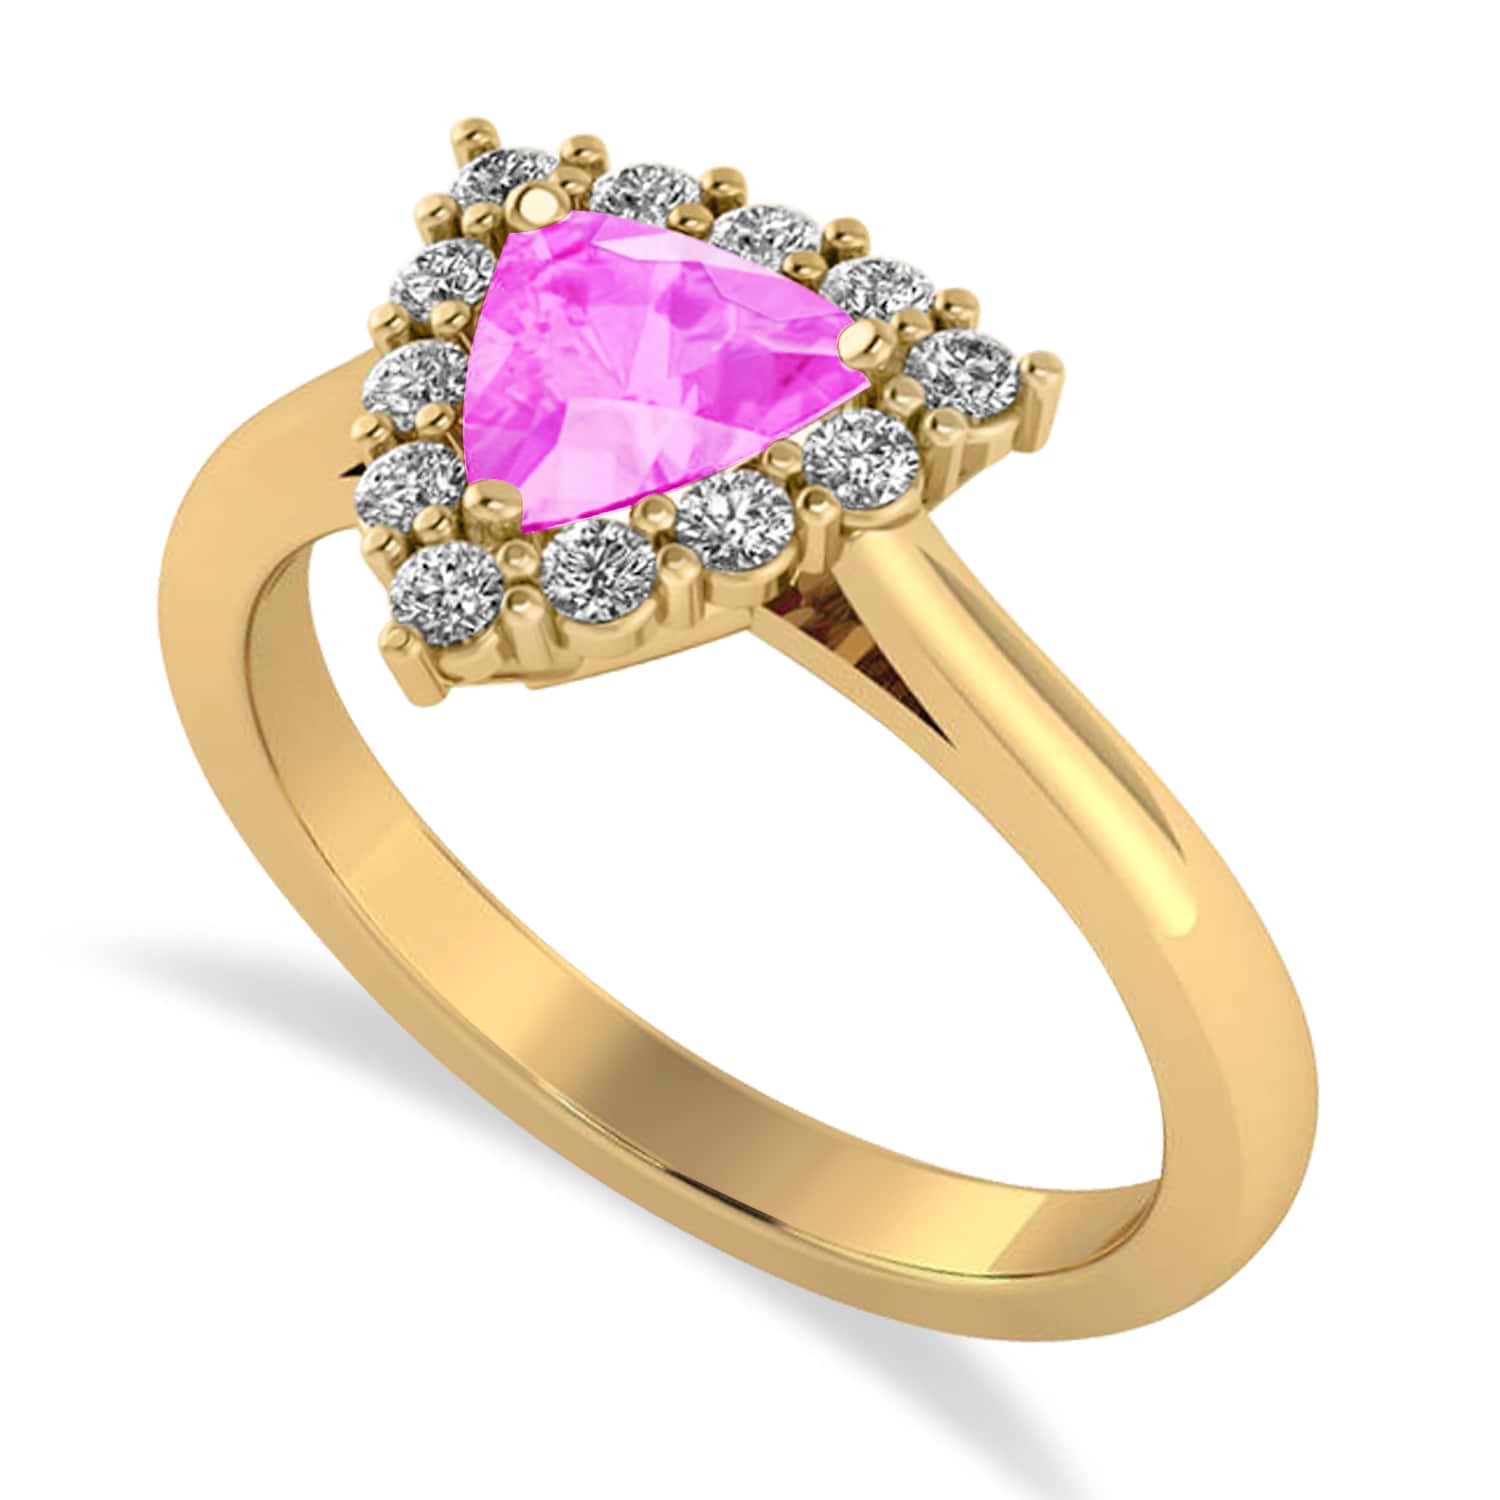 Diamond & Pink Sapphire Trillion Cut Ring 14k Yellow Gold (1.78ct)